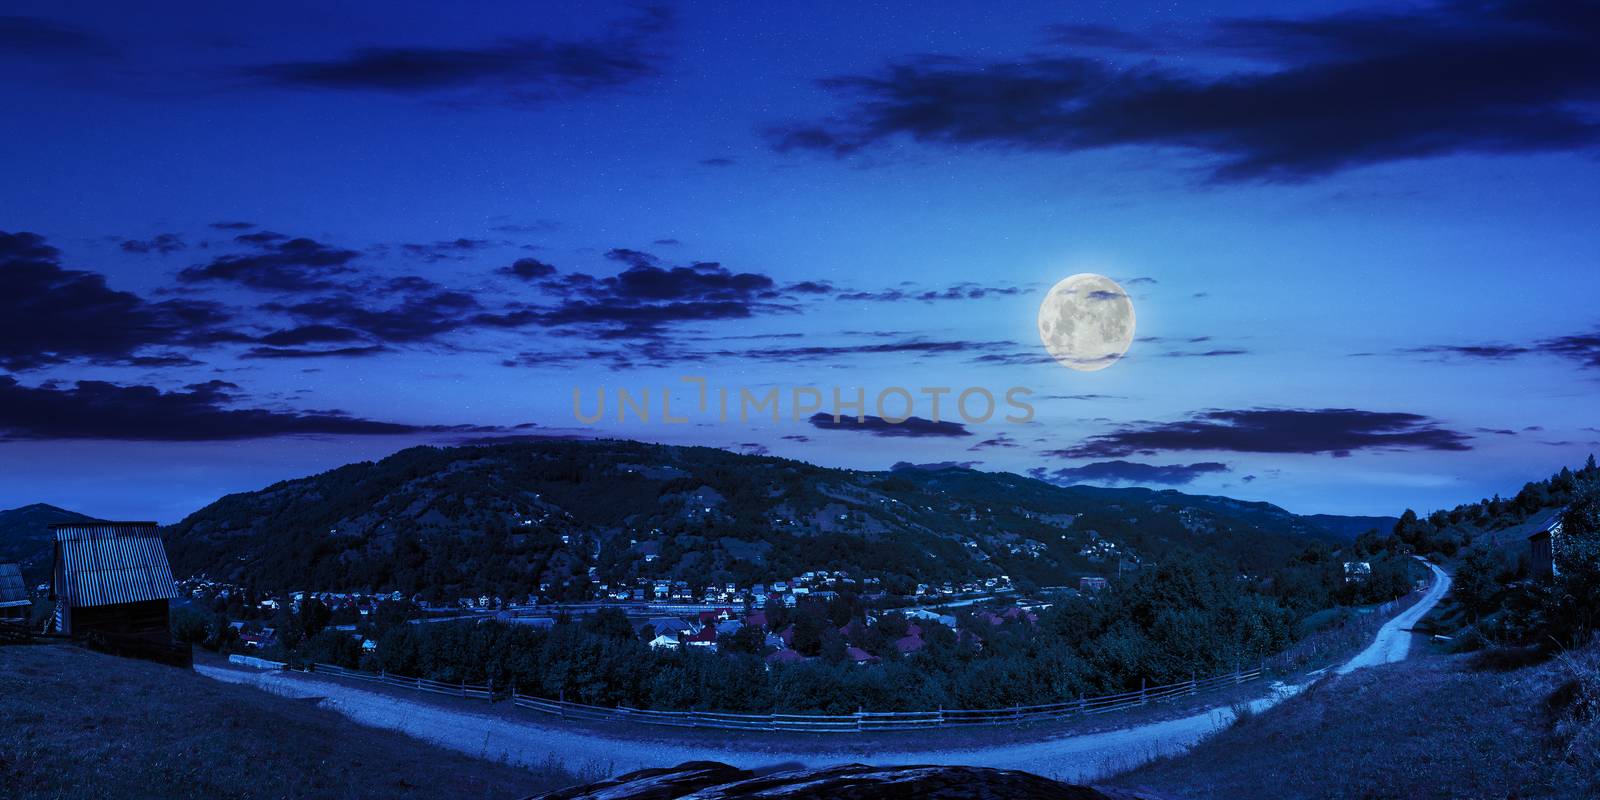 village on hillside of mountain at night by Pellinni